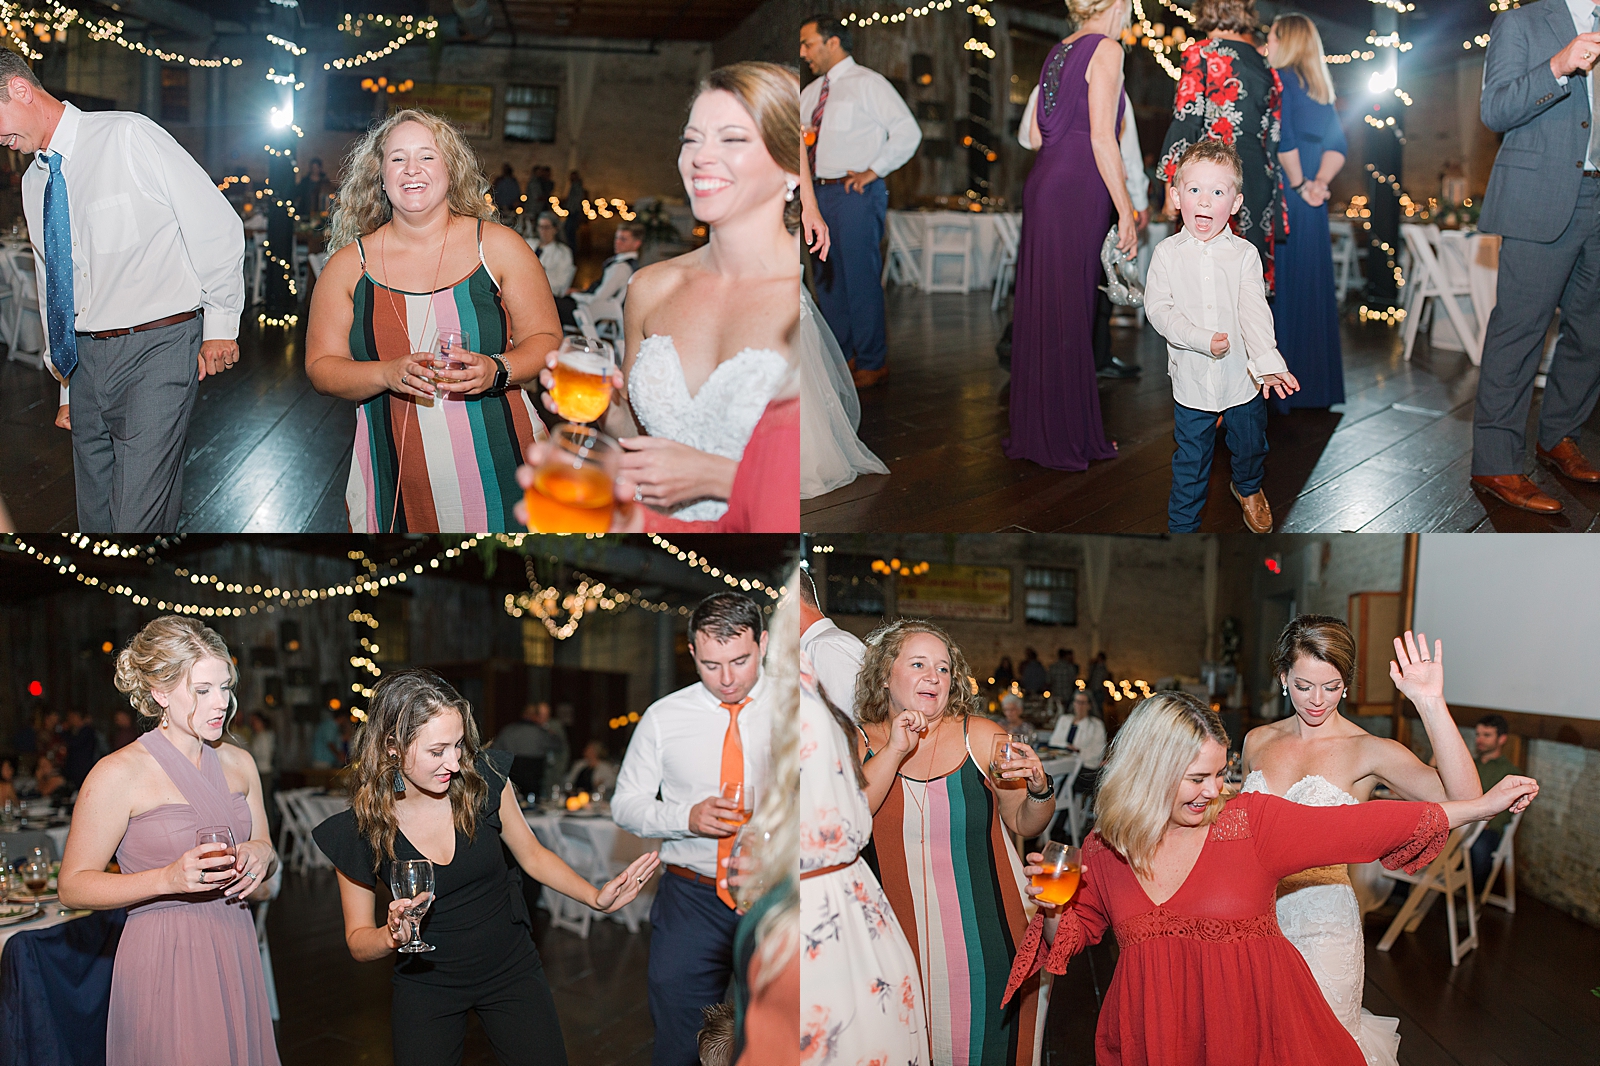 The Hackney Warehouse Wedding Reception Guests Dancing Photos